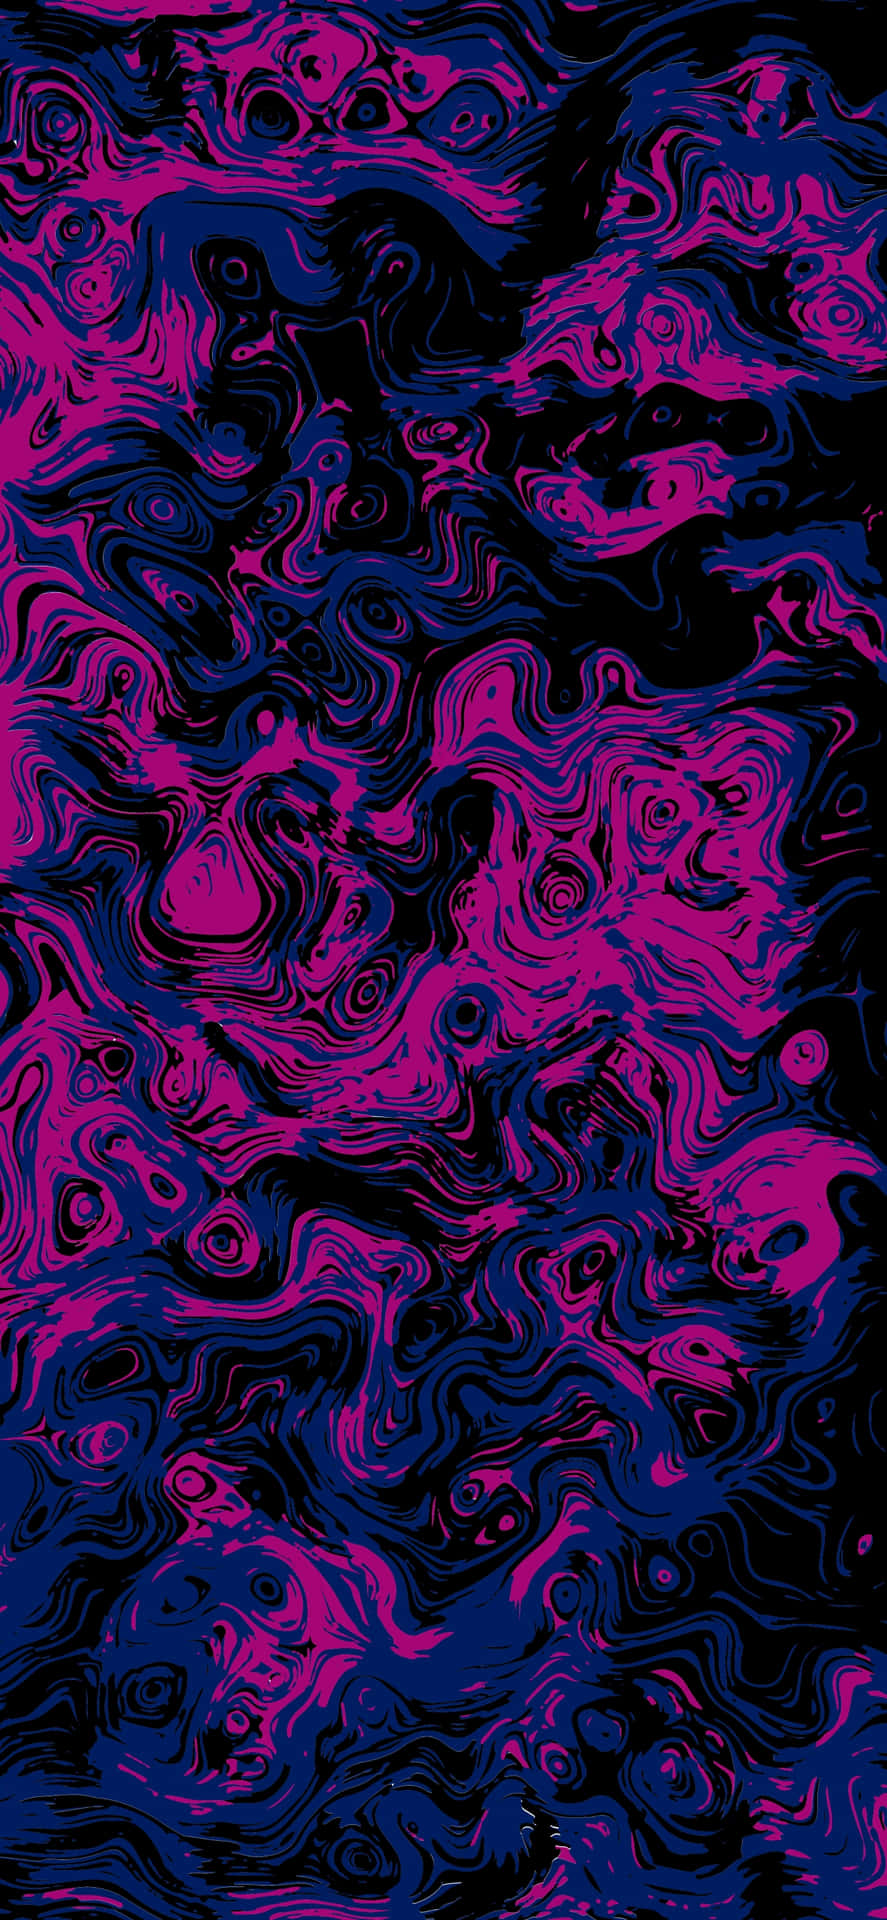 a purple and black swirling pattern Wallpaper